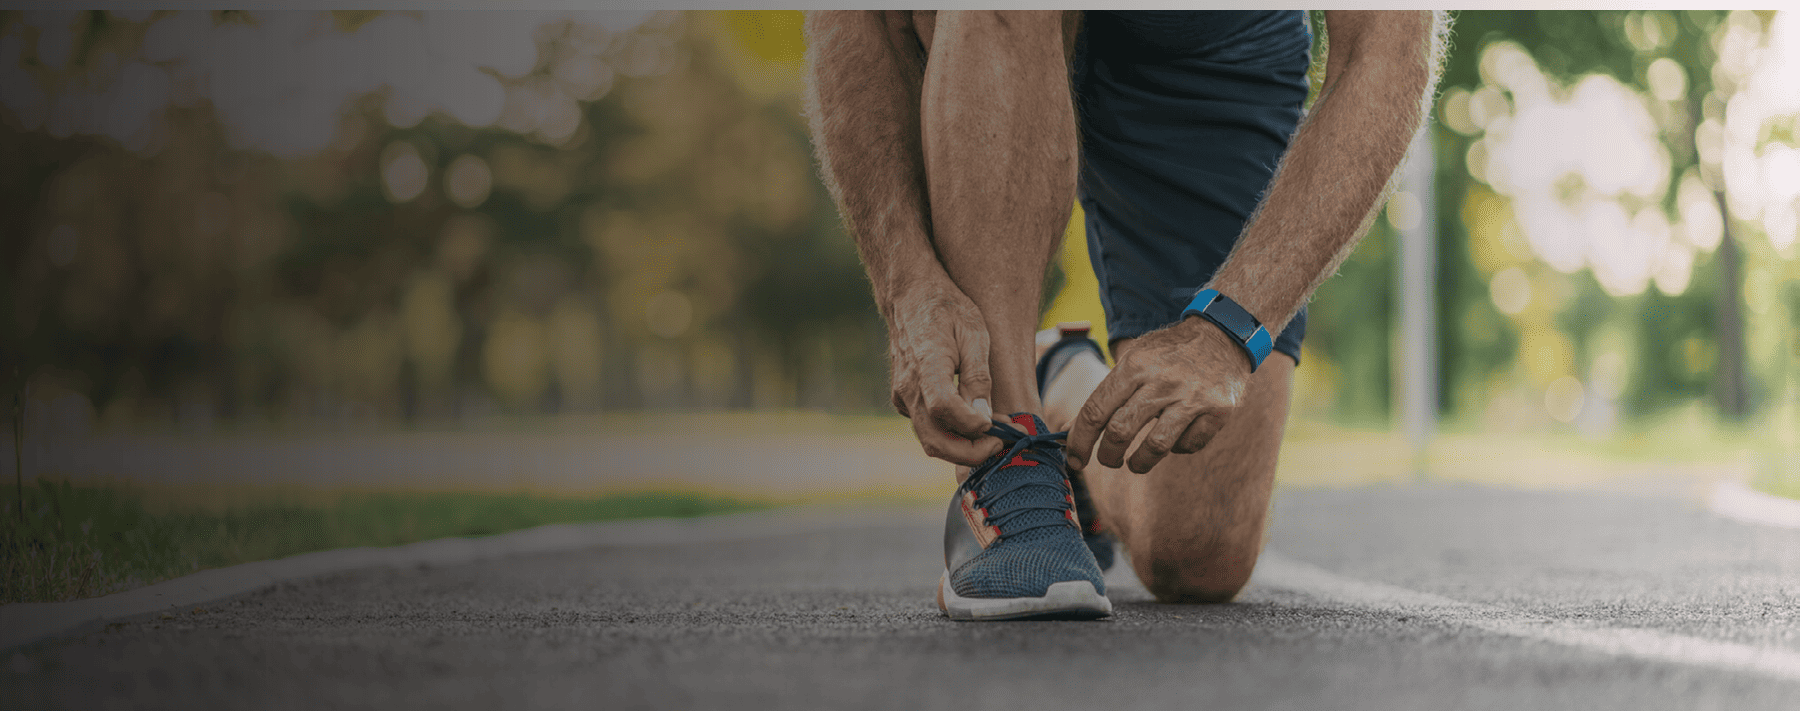 Starting A Running Program: Beginner 5K Training Plan | Lexipol